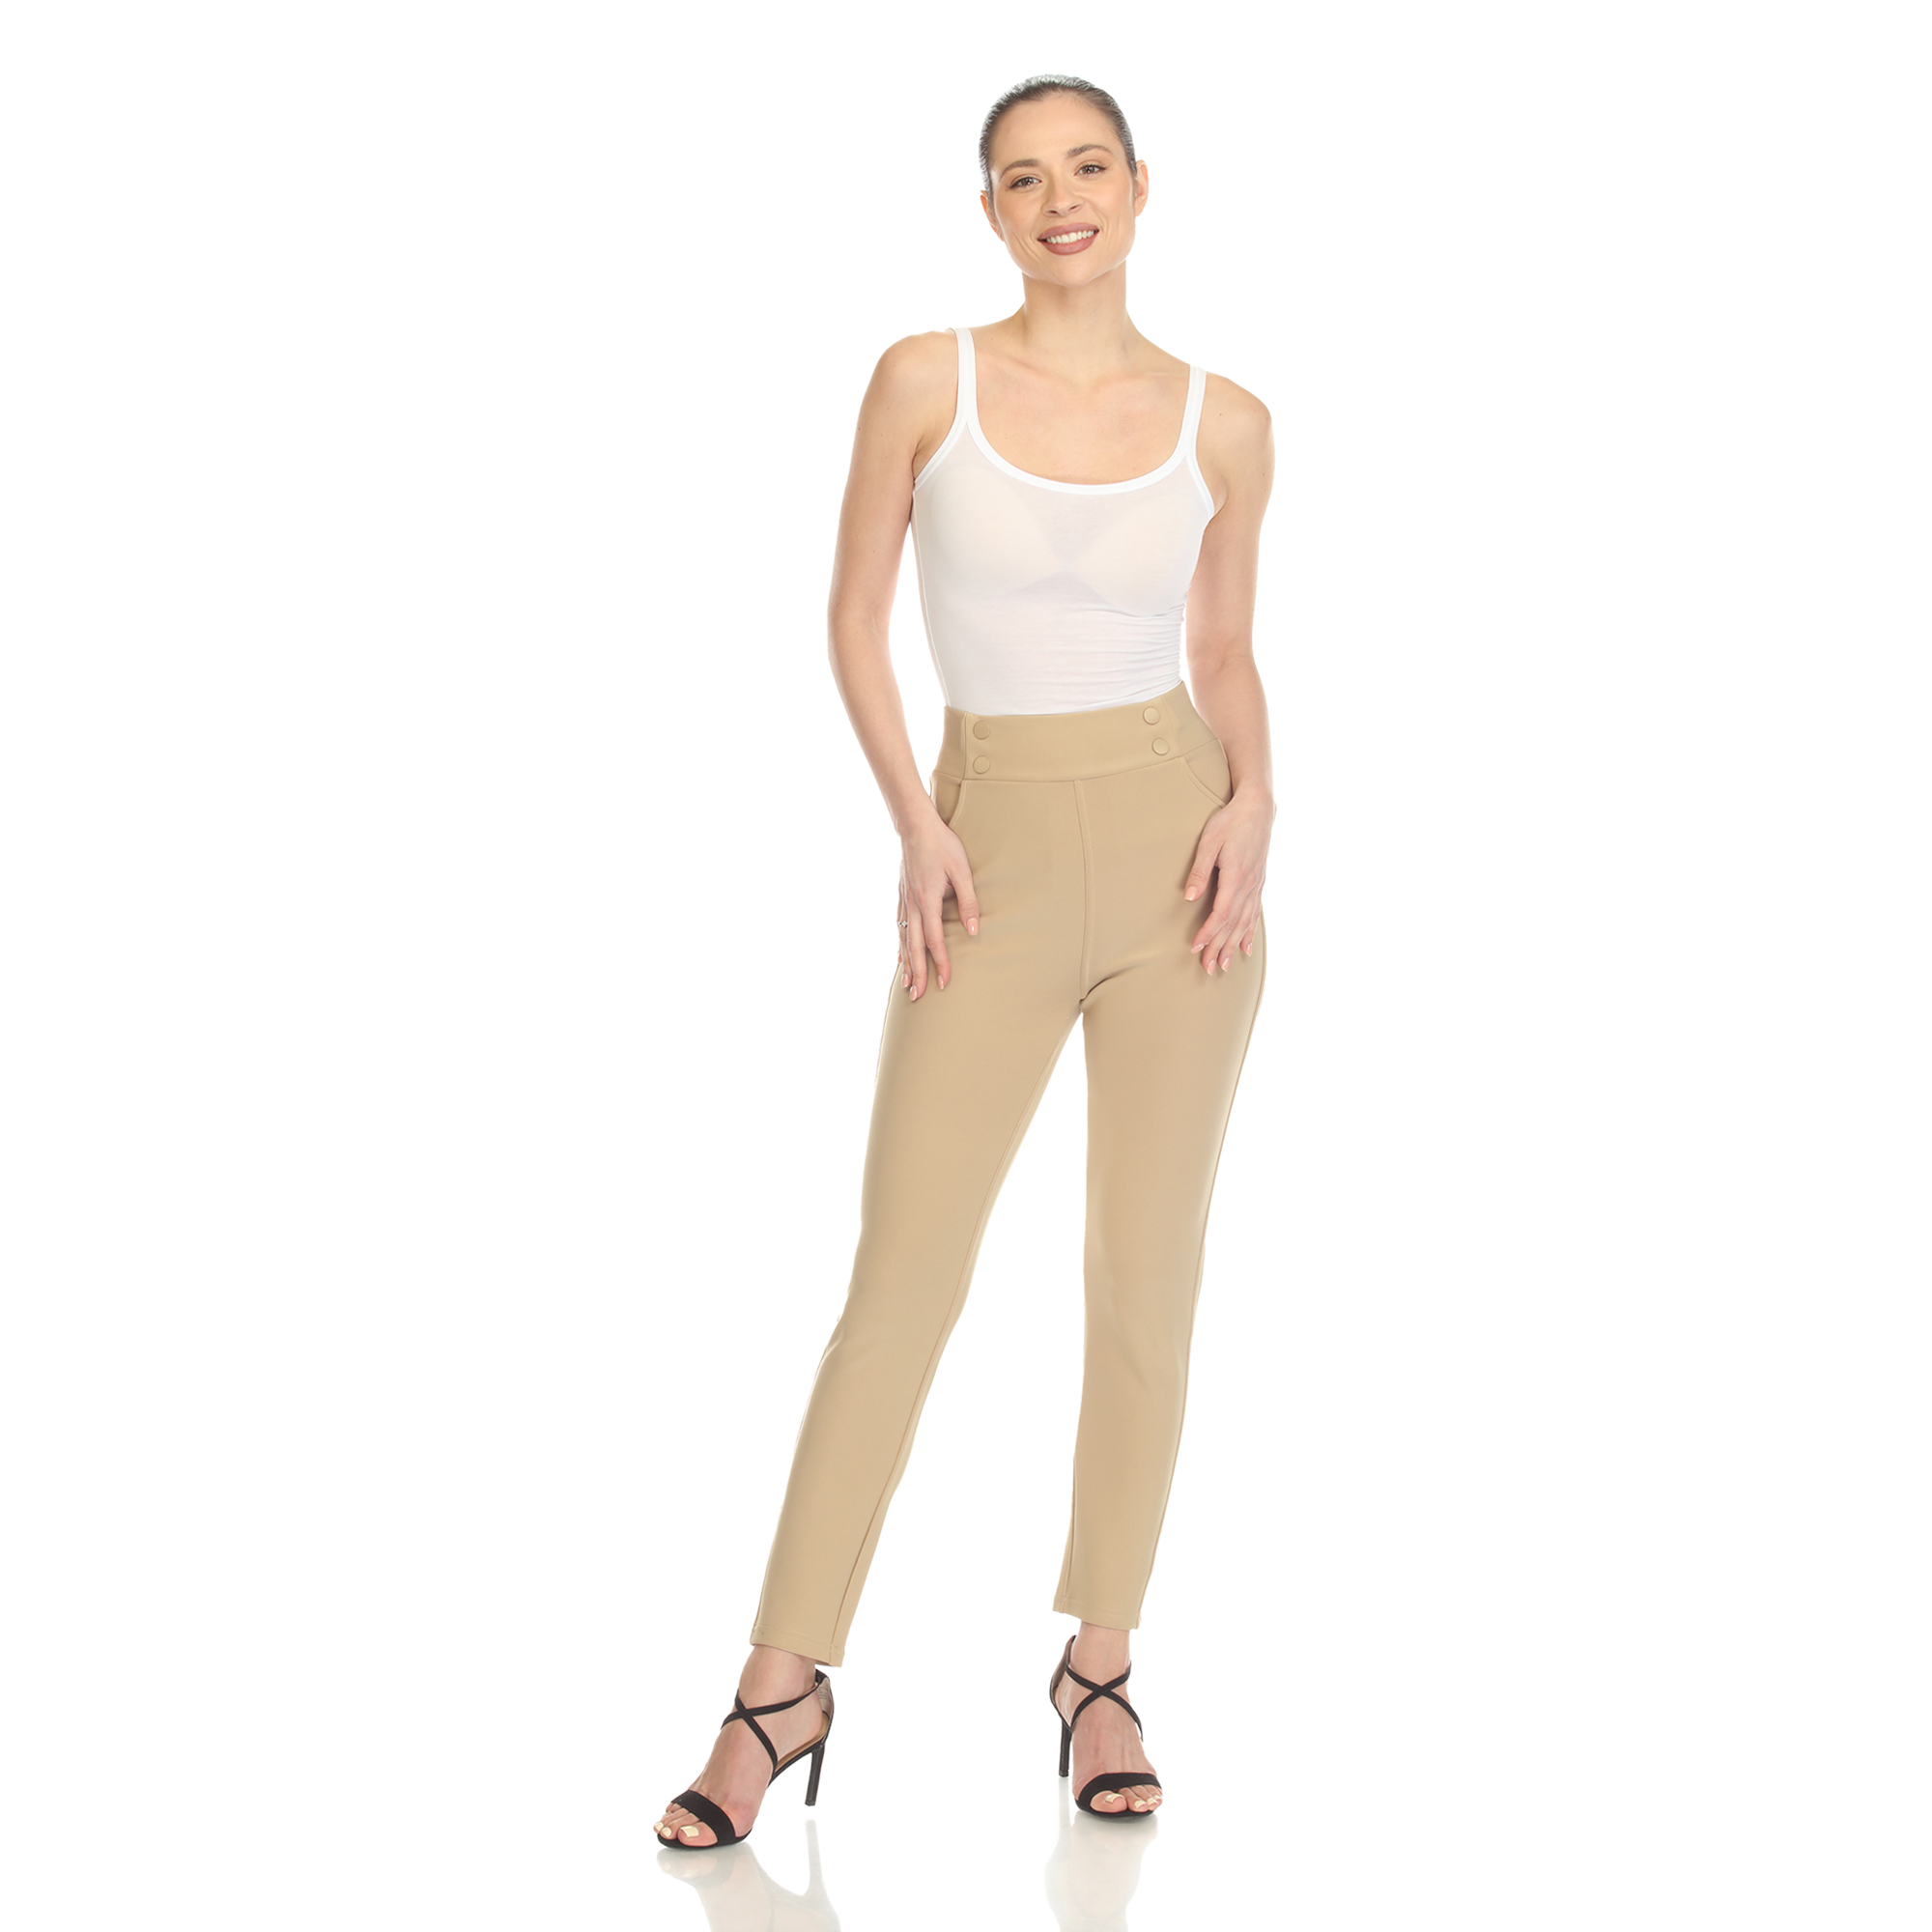 White Mark Women's Super Soft Elastic Waistband High Waist Scuba Pants With Pockets - Beige, 1X